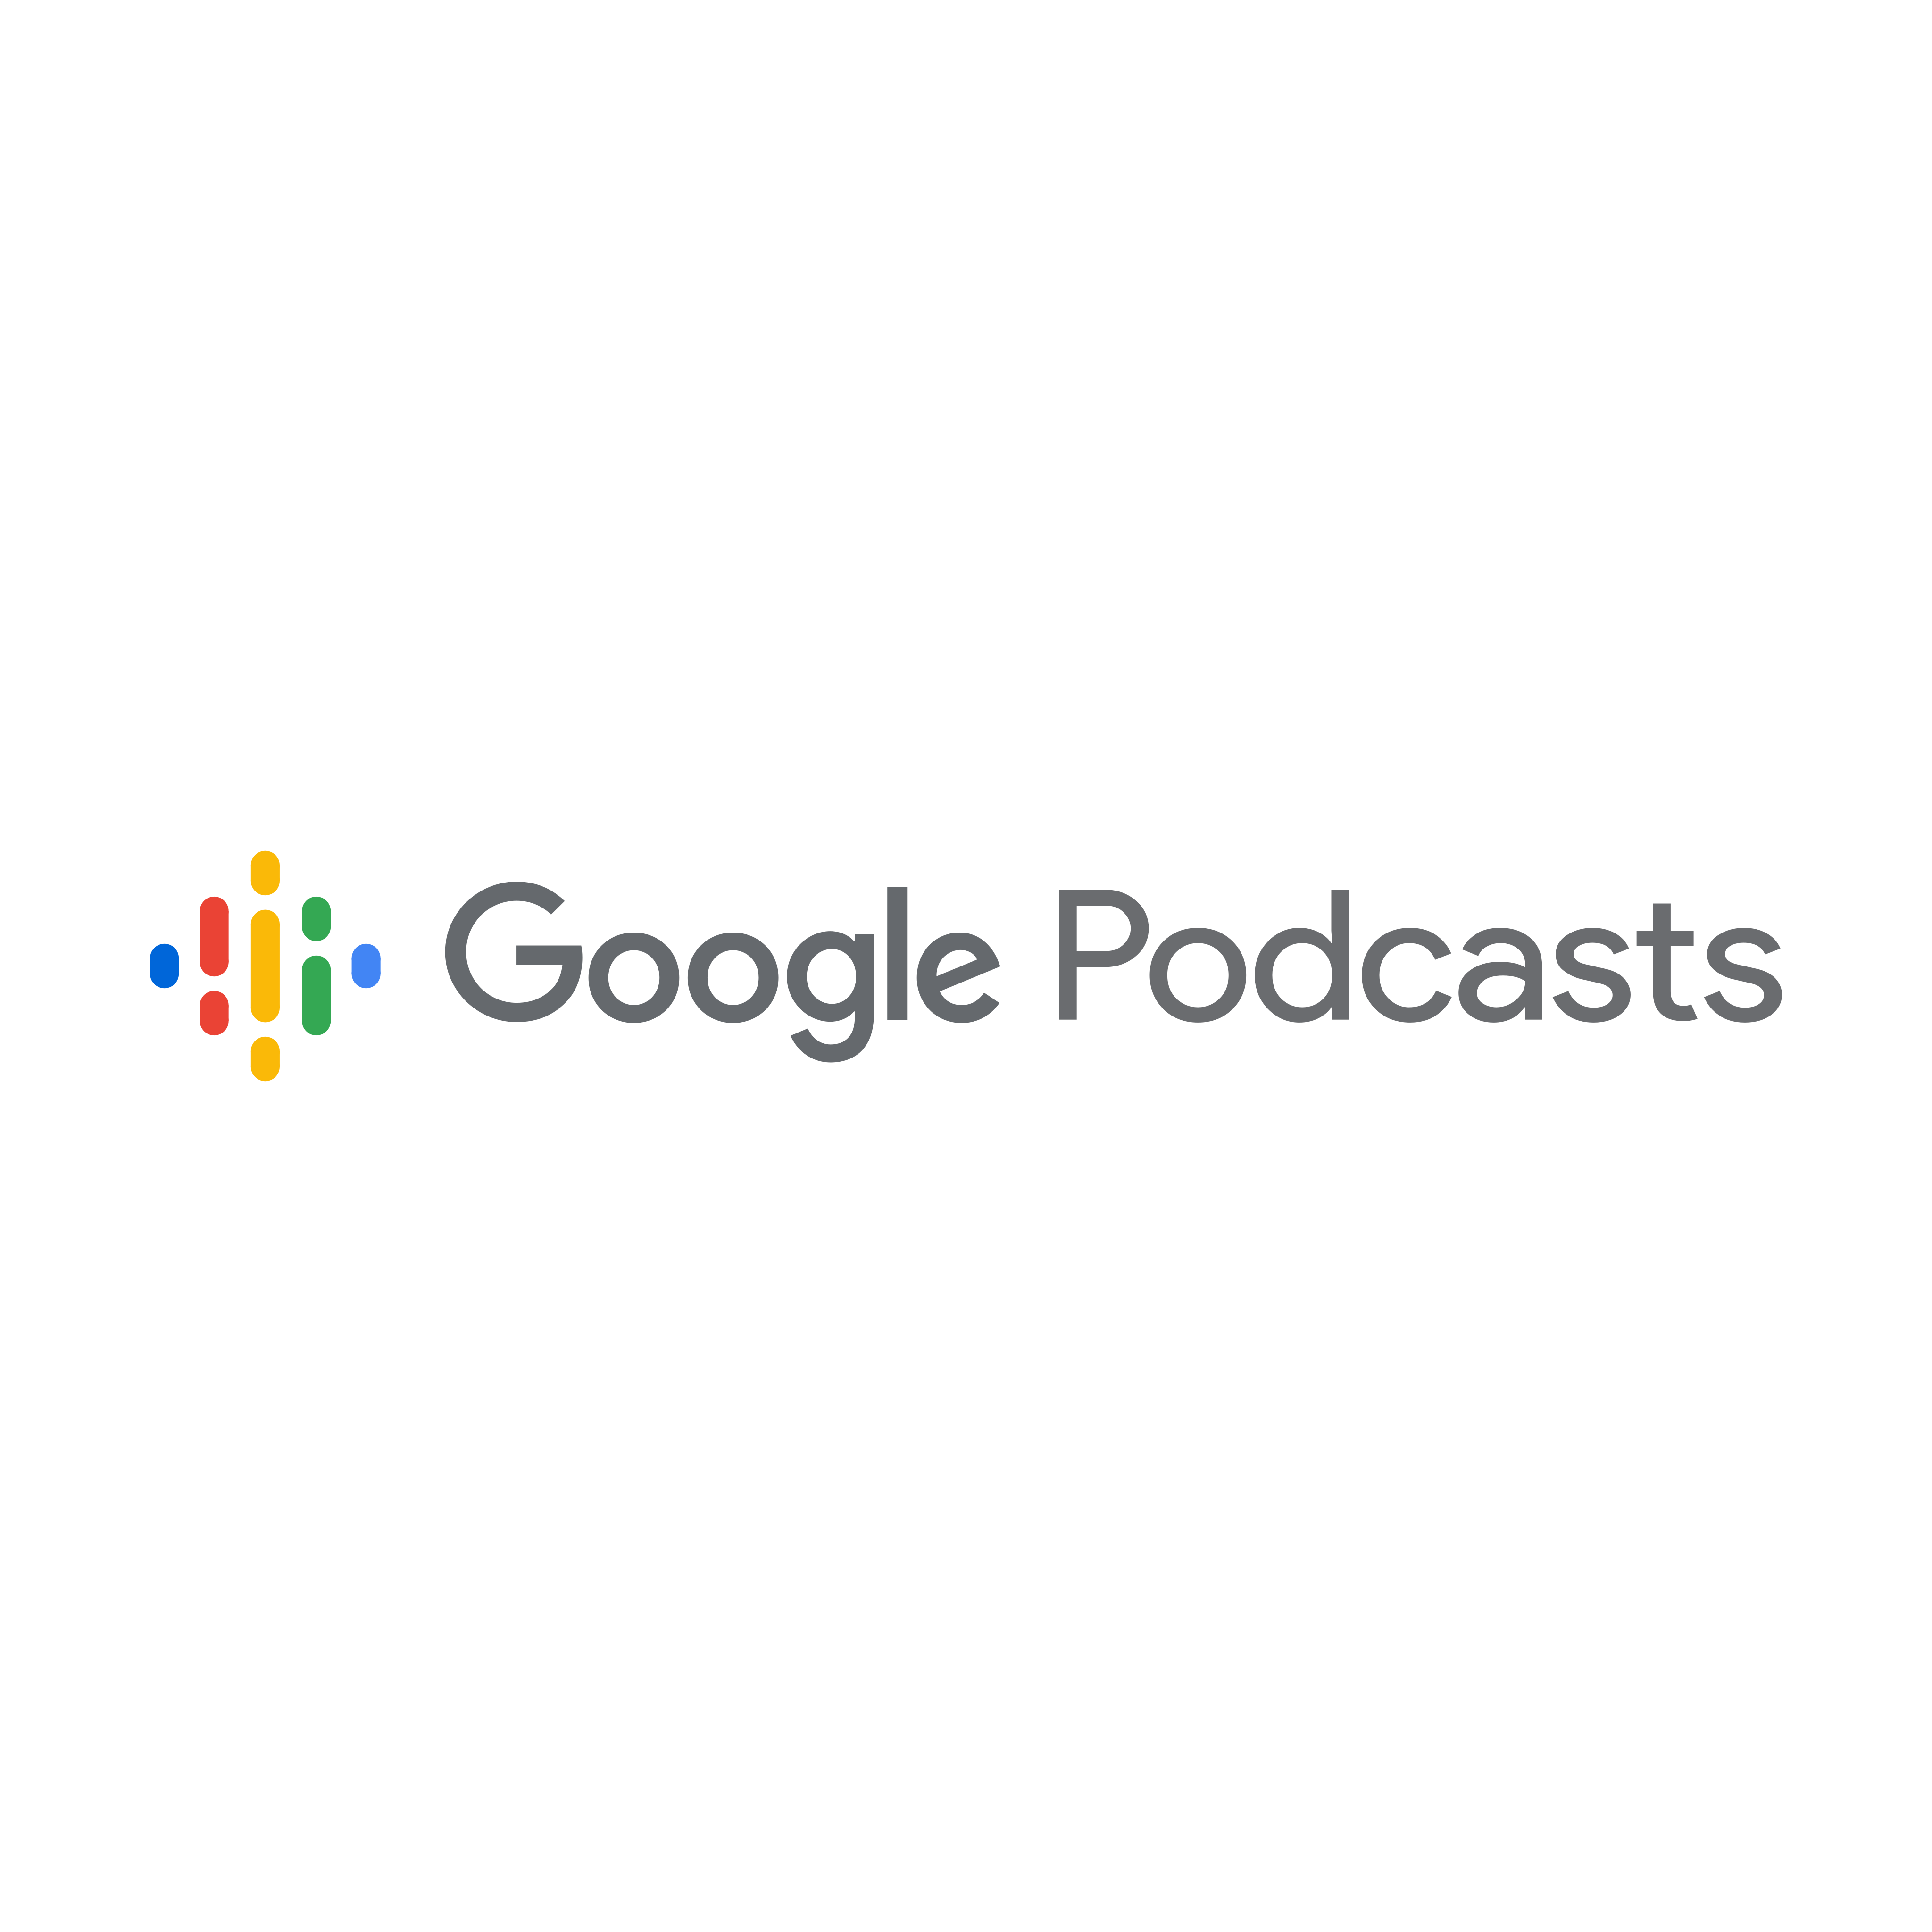 Google Podcasts Logo PNG.